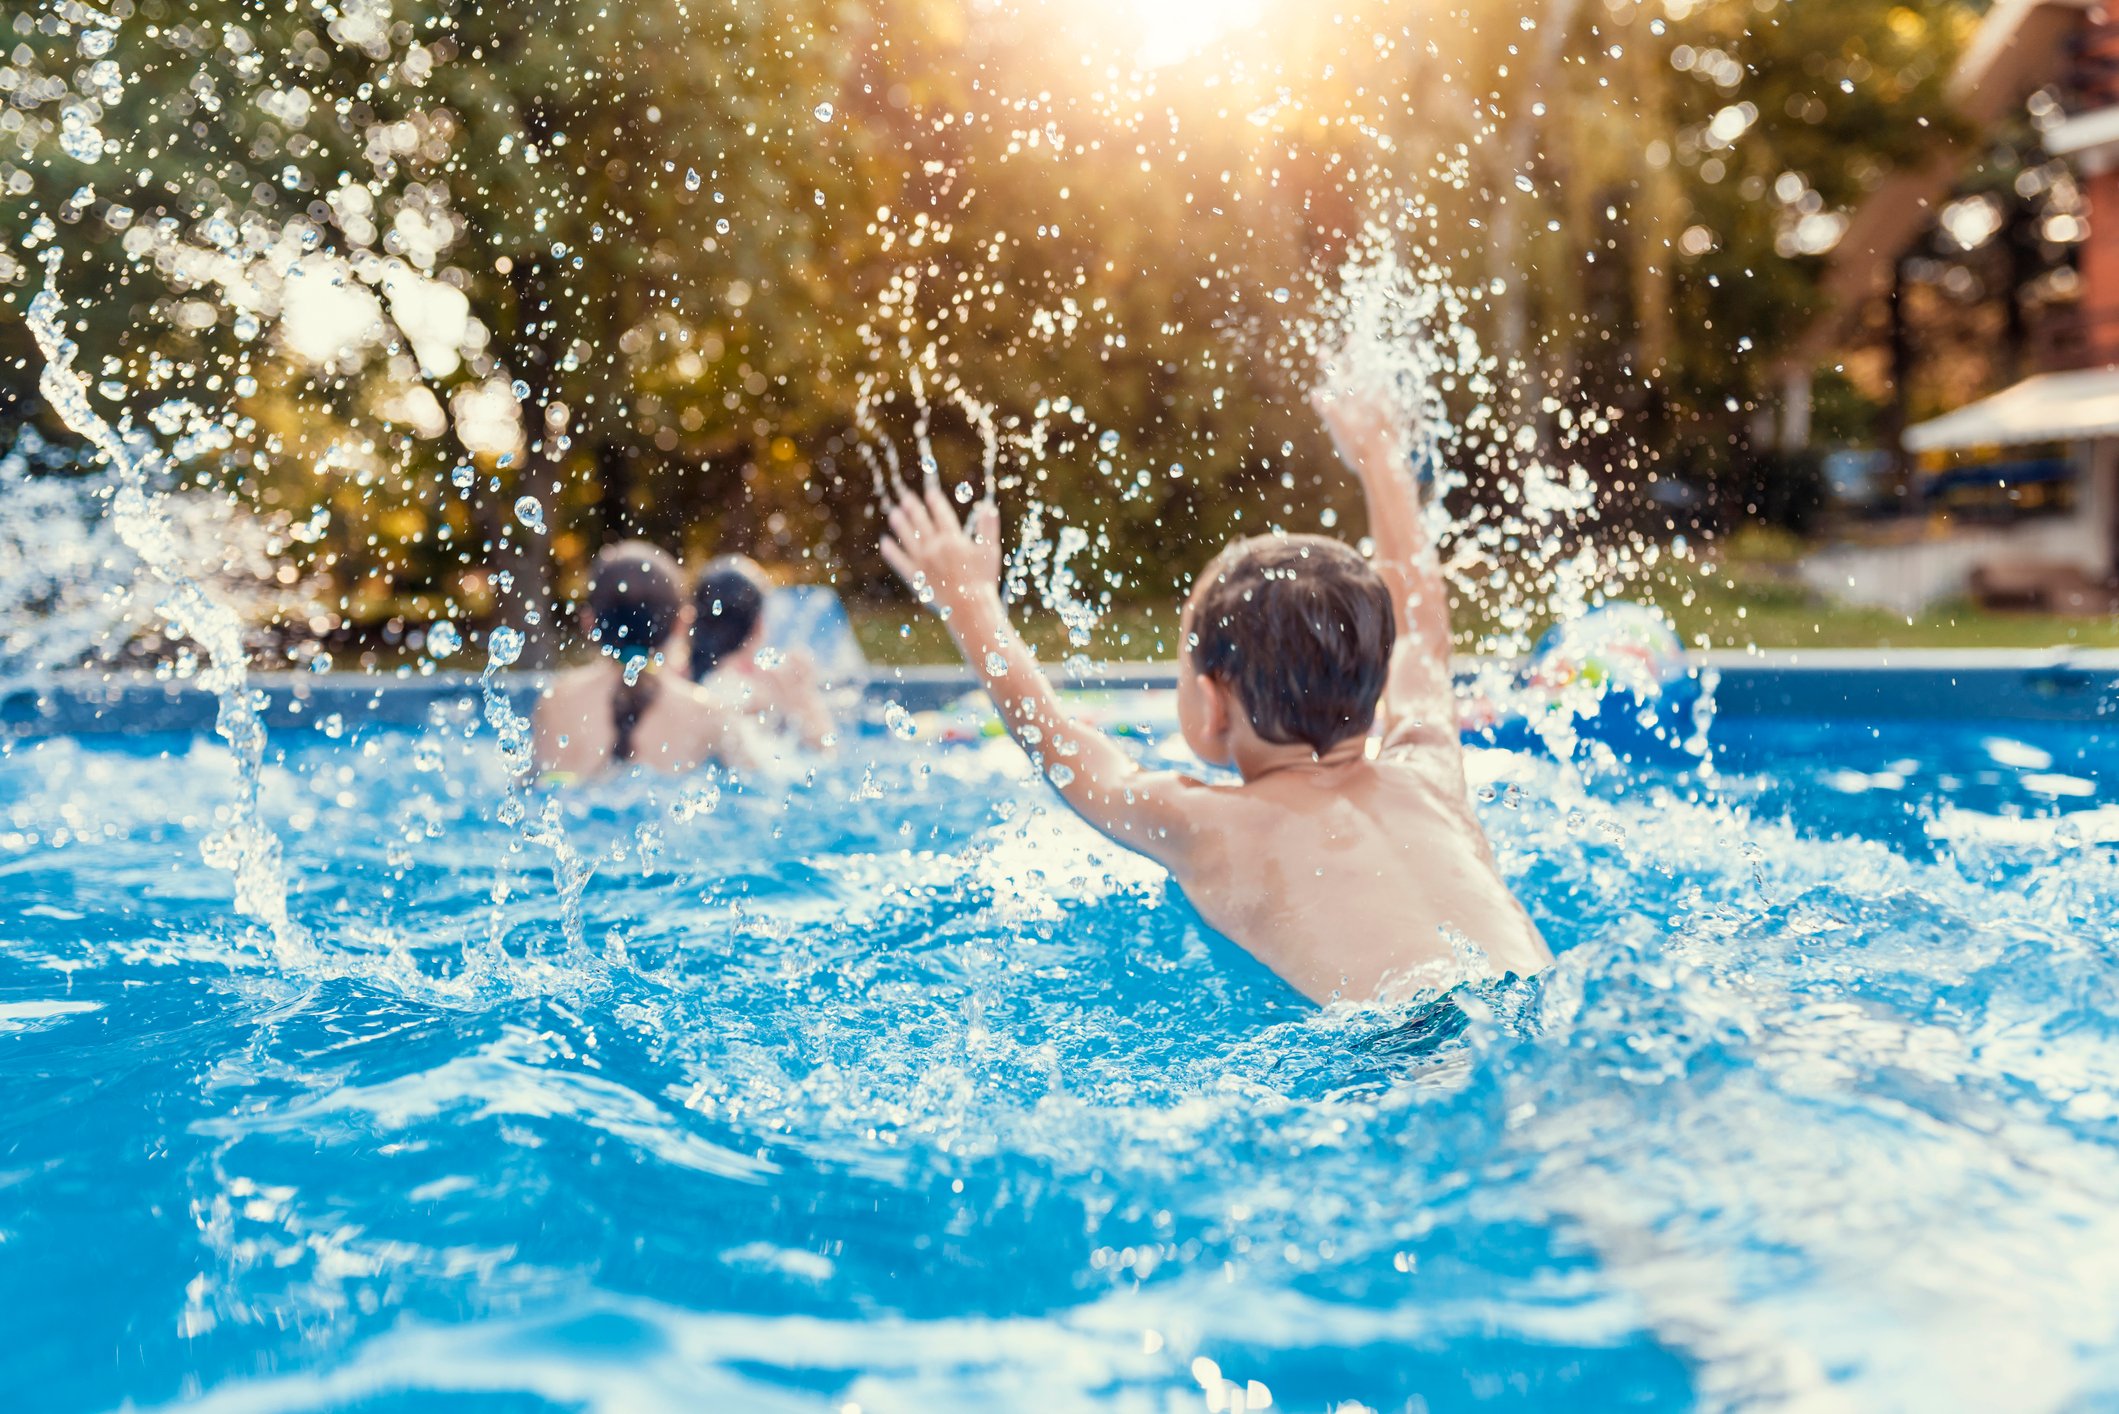 Kids playing and splashing in a pool.